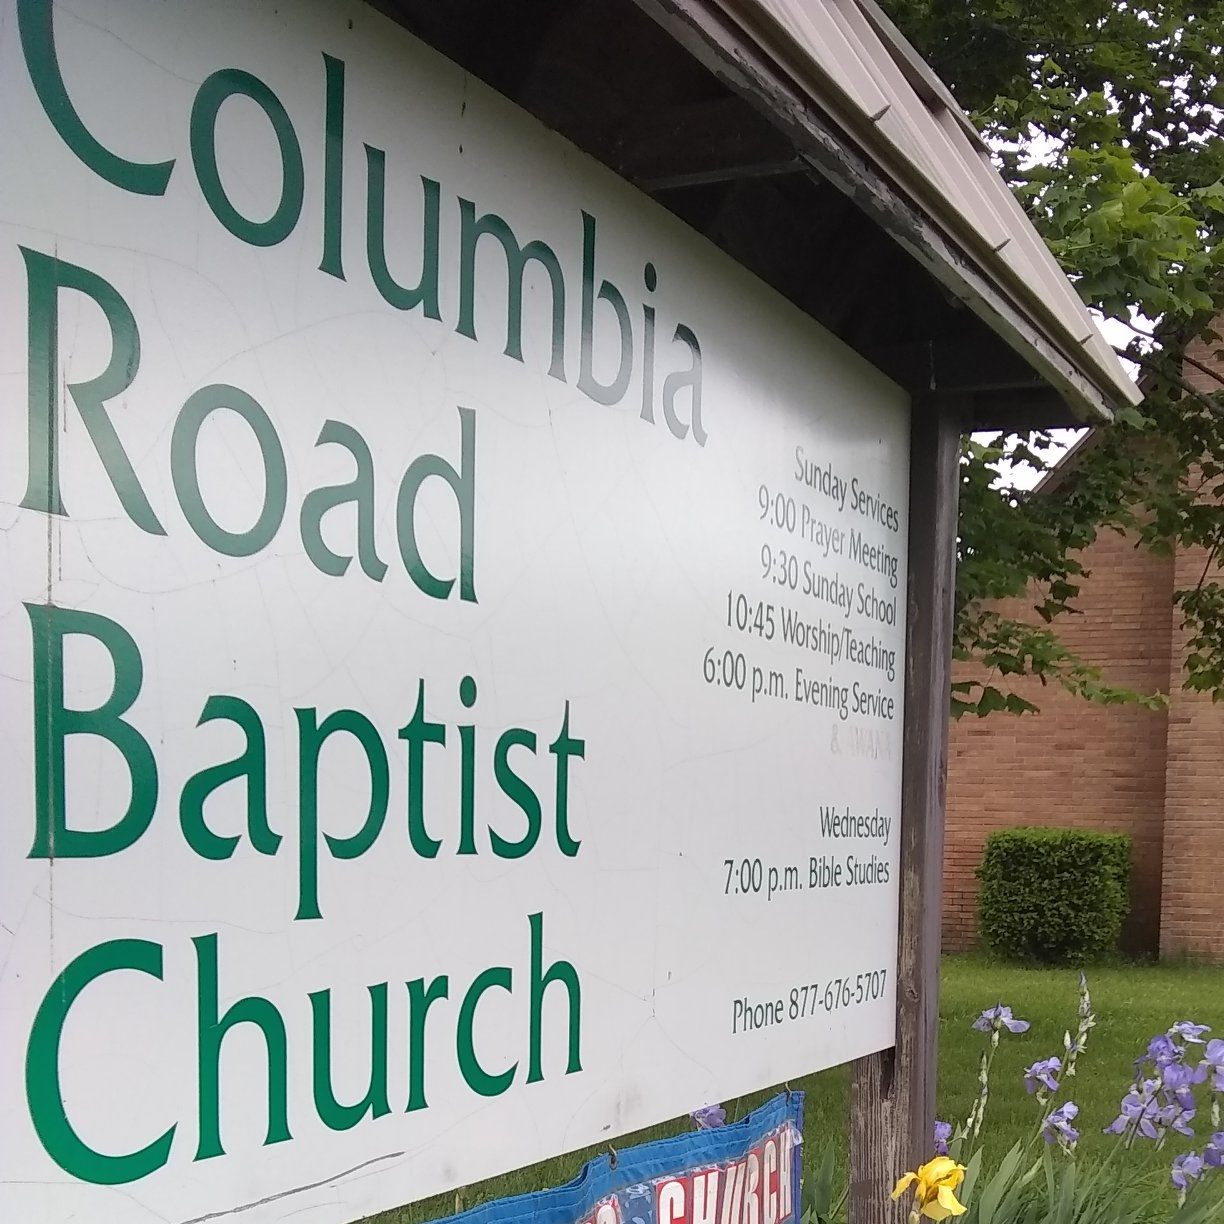 Columbia Road Baptist Church